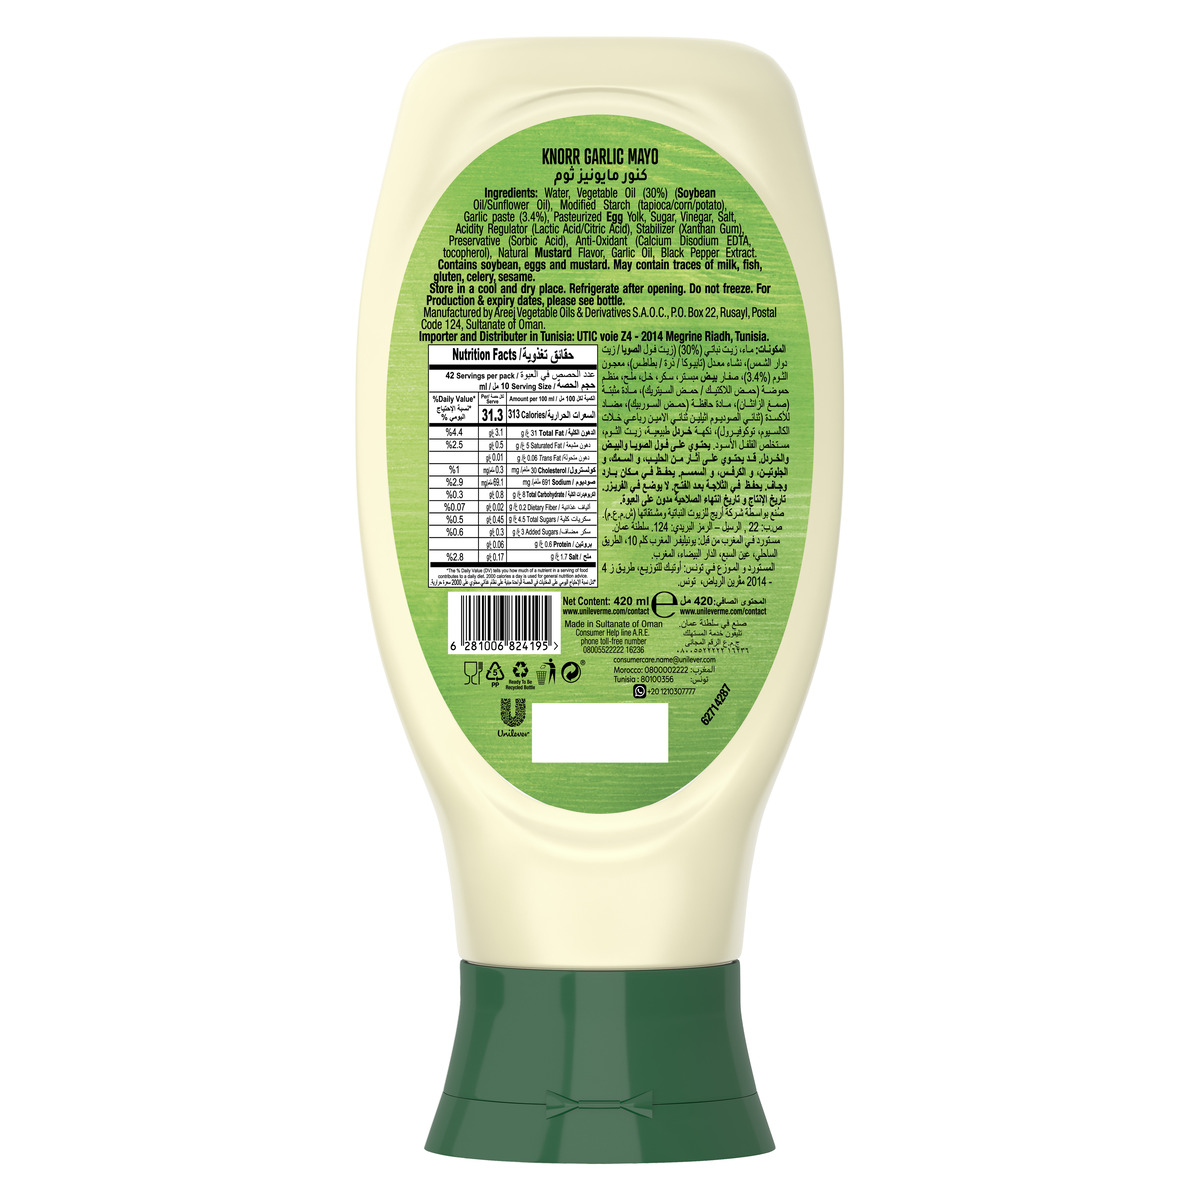 Knorr Garlic-Mayo, 420 ml